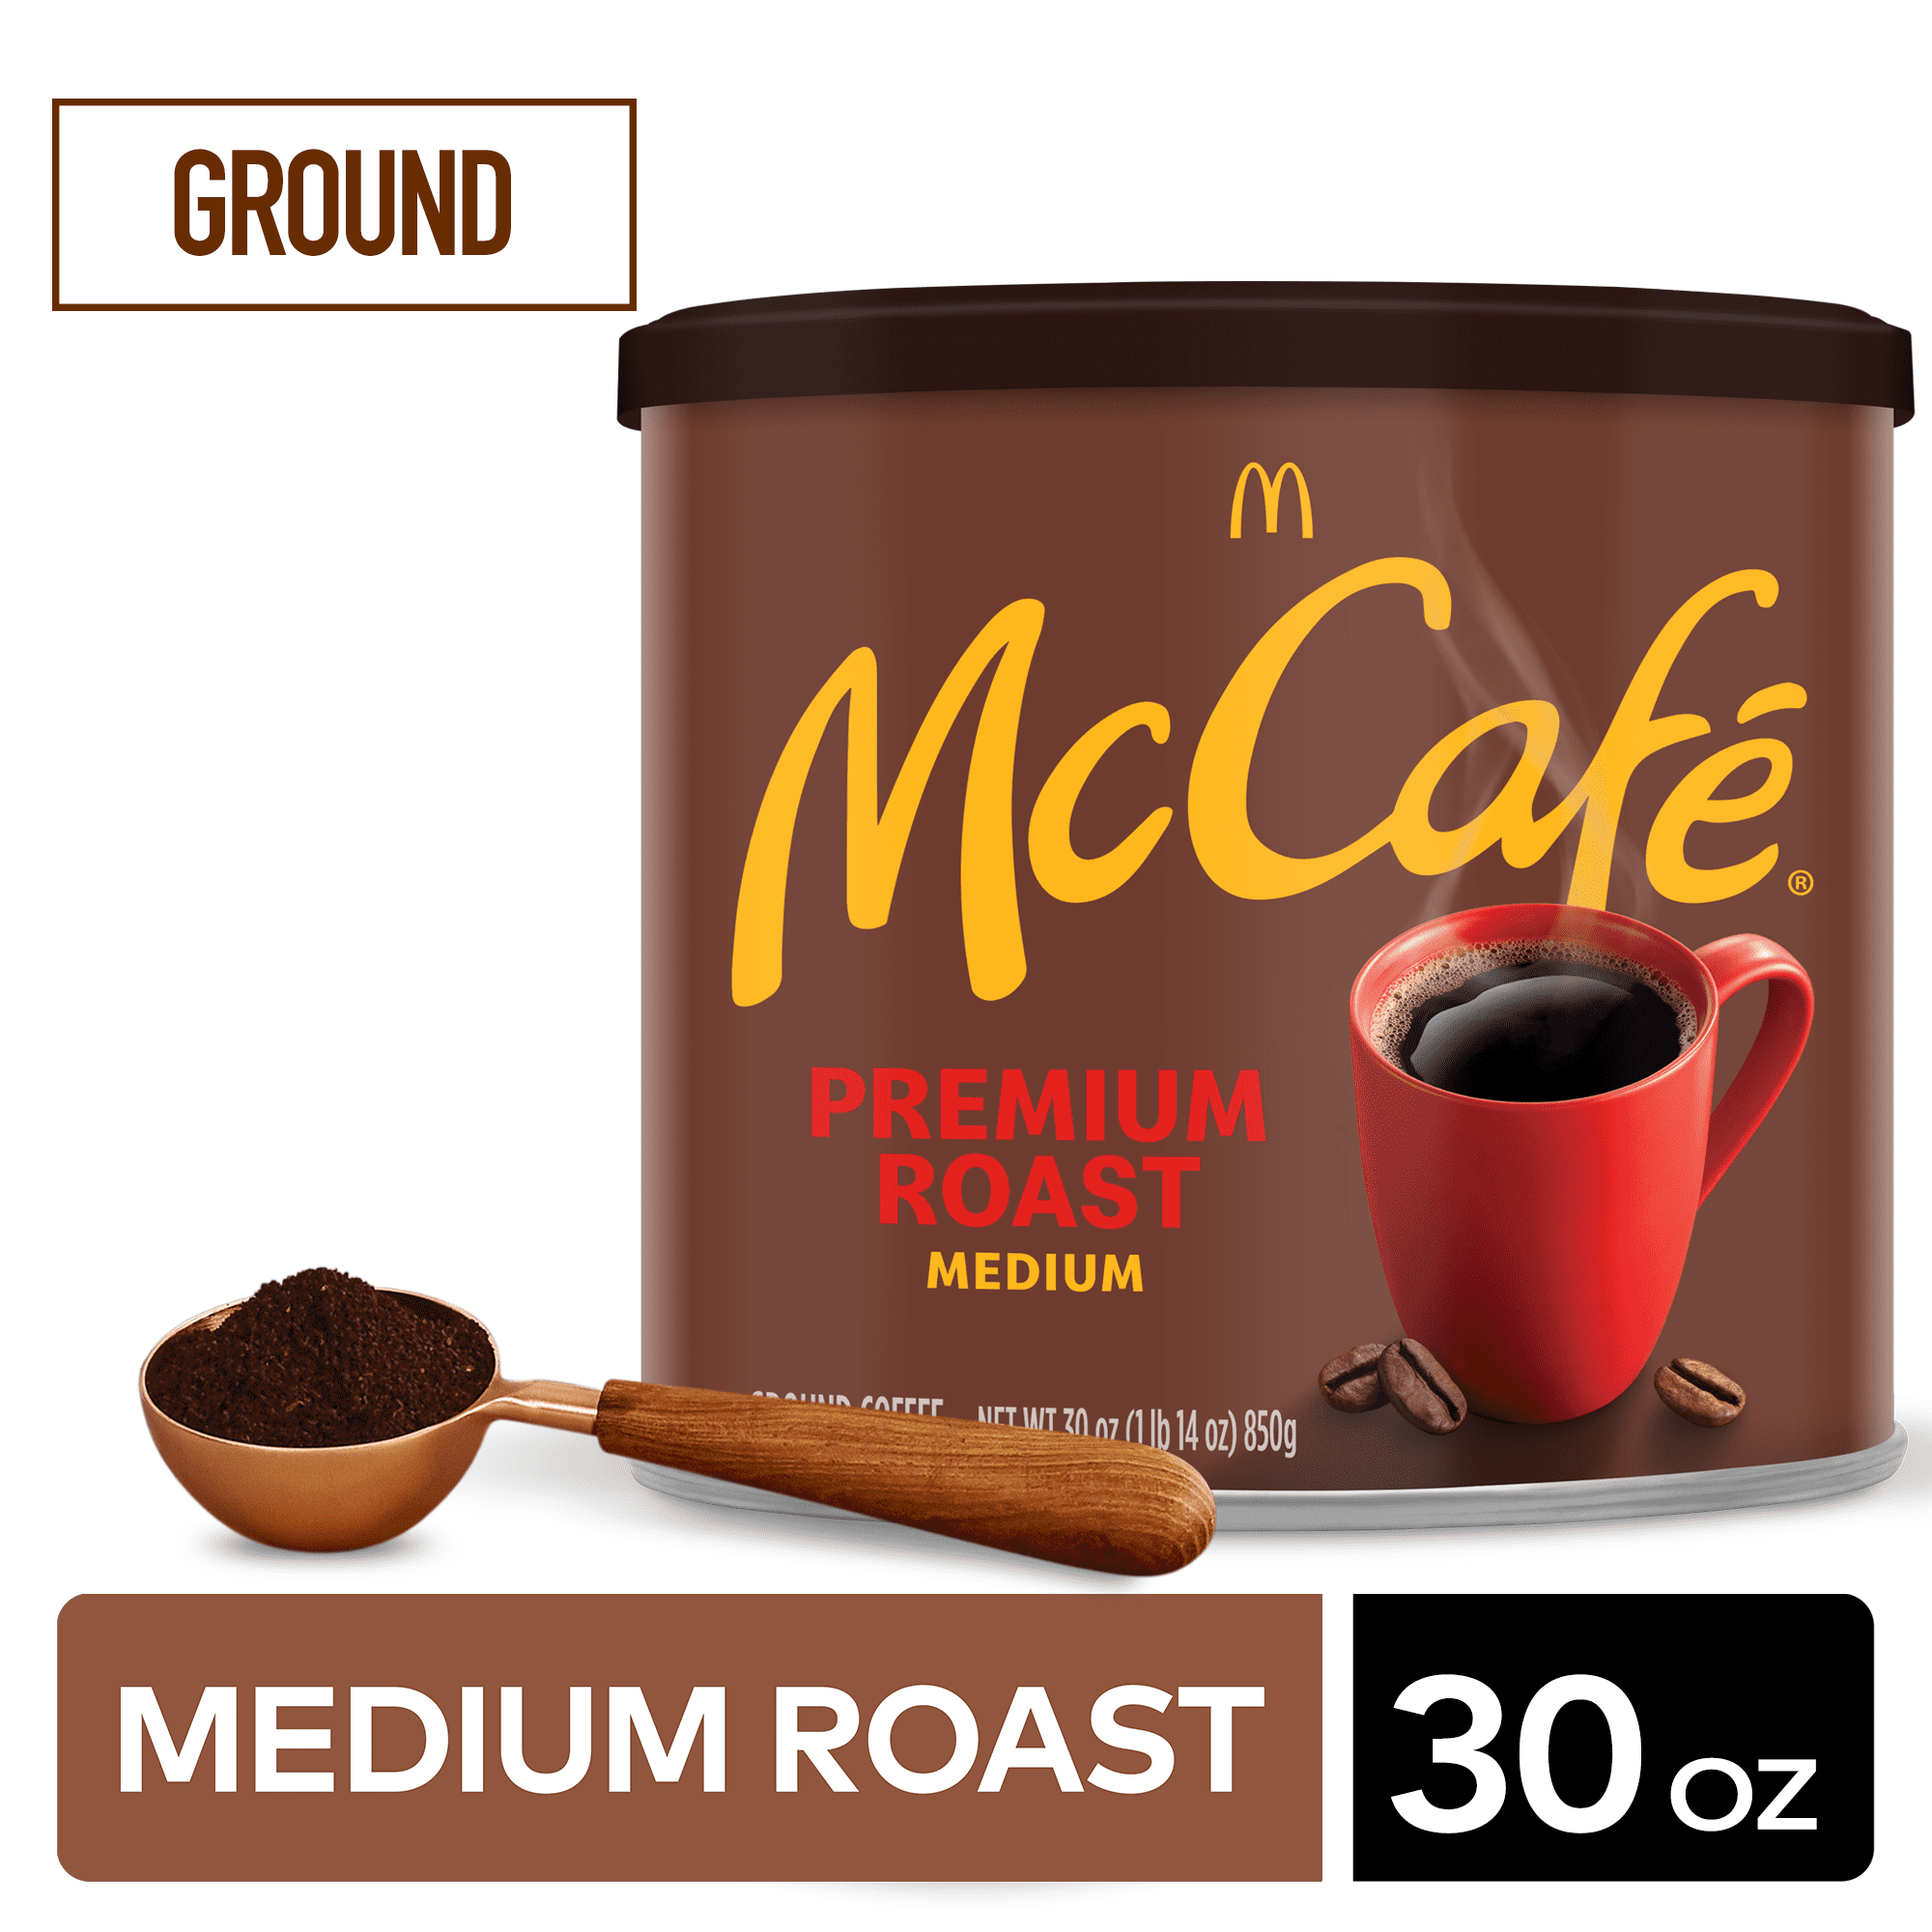 McCafe Premium Roast Ground Coffee, Medium Roast, 30 oz